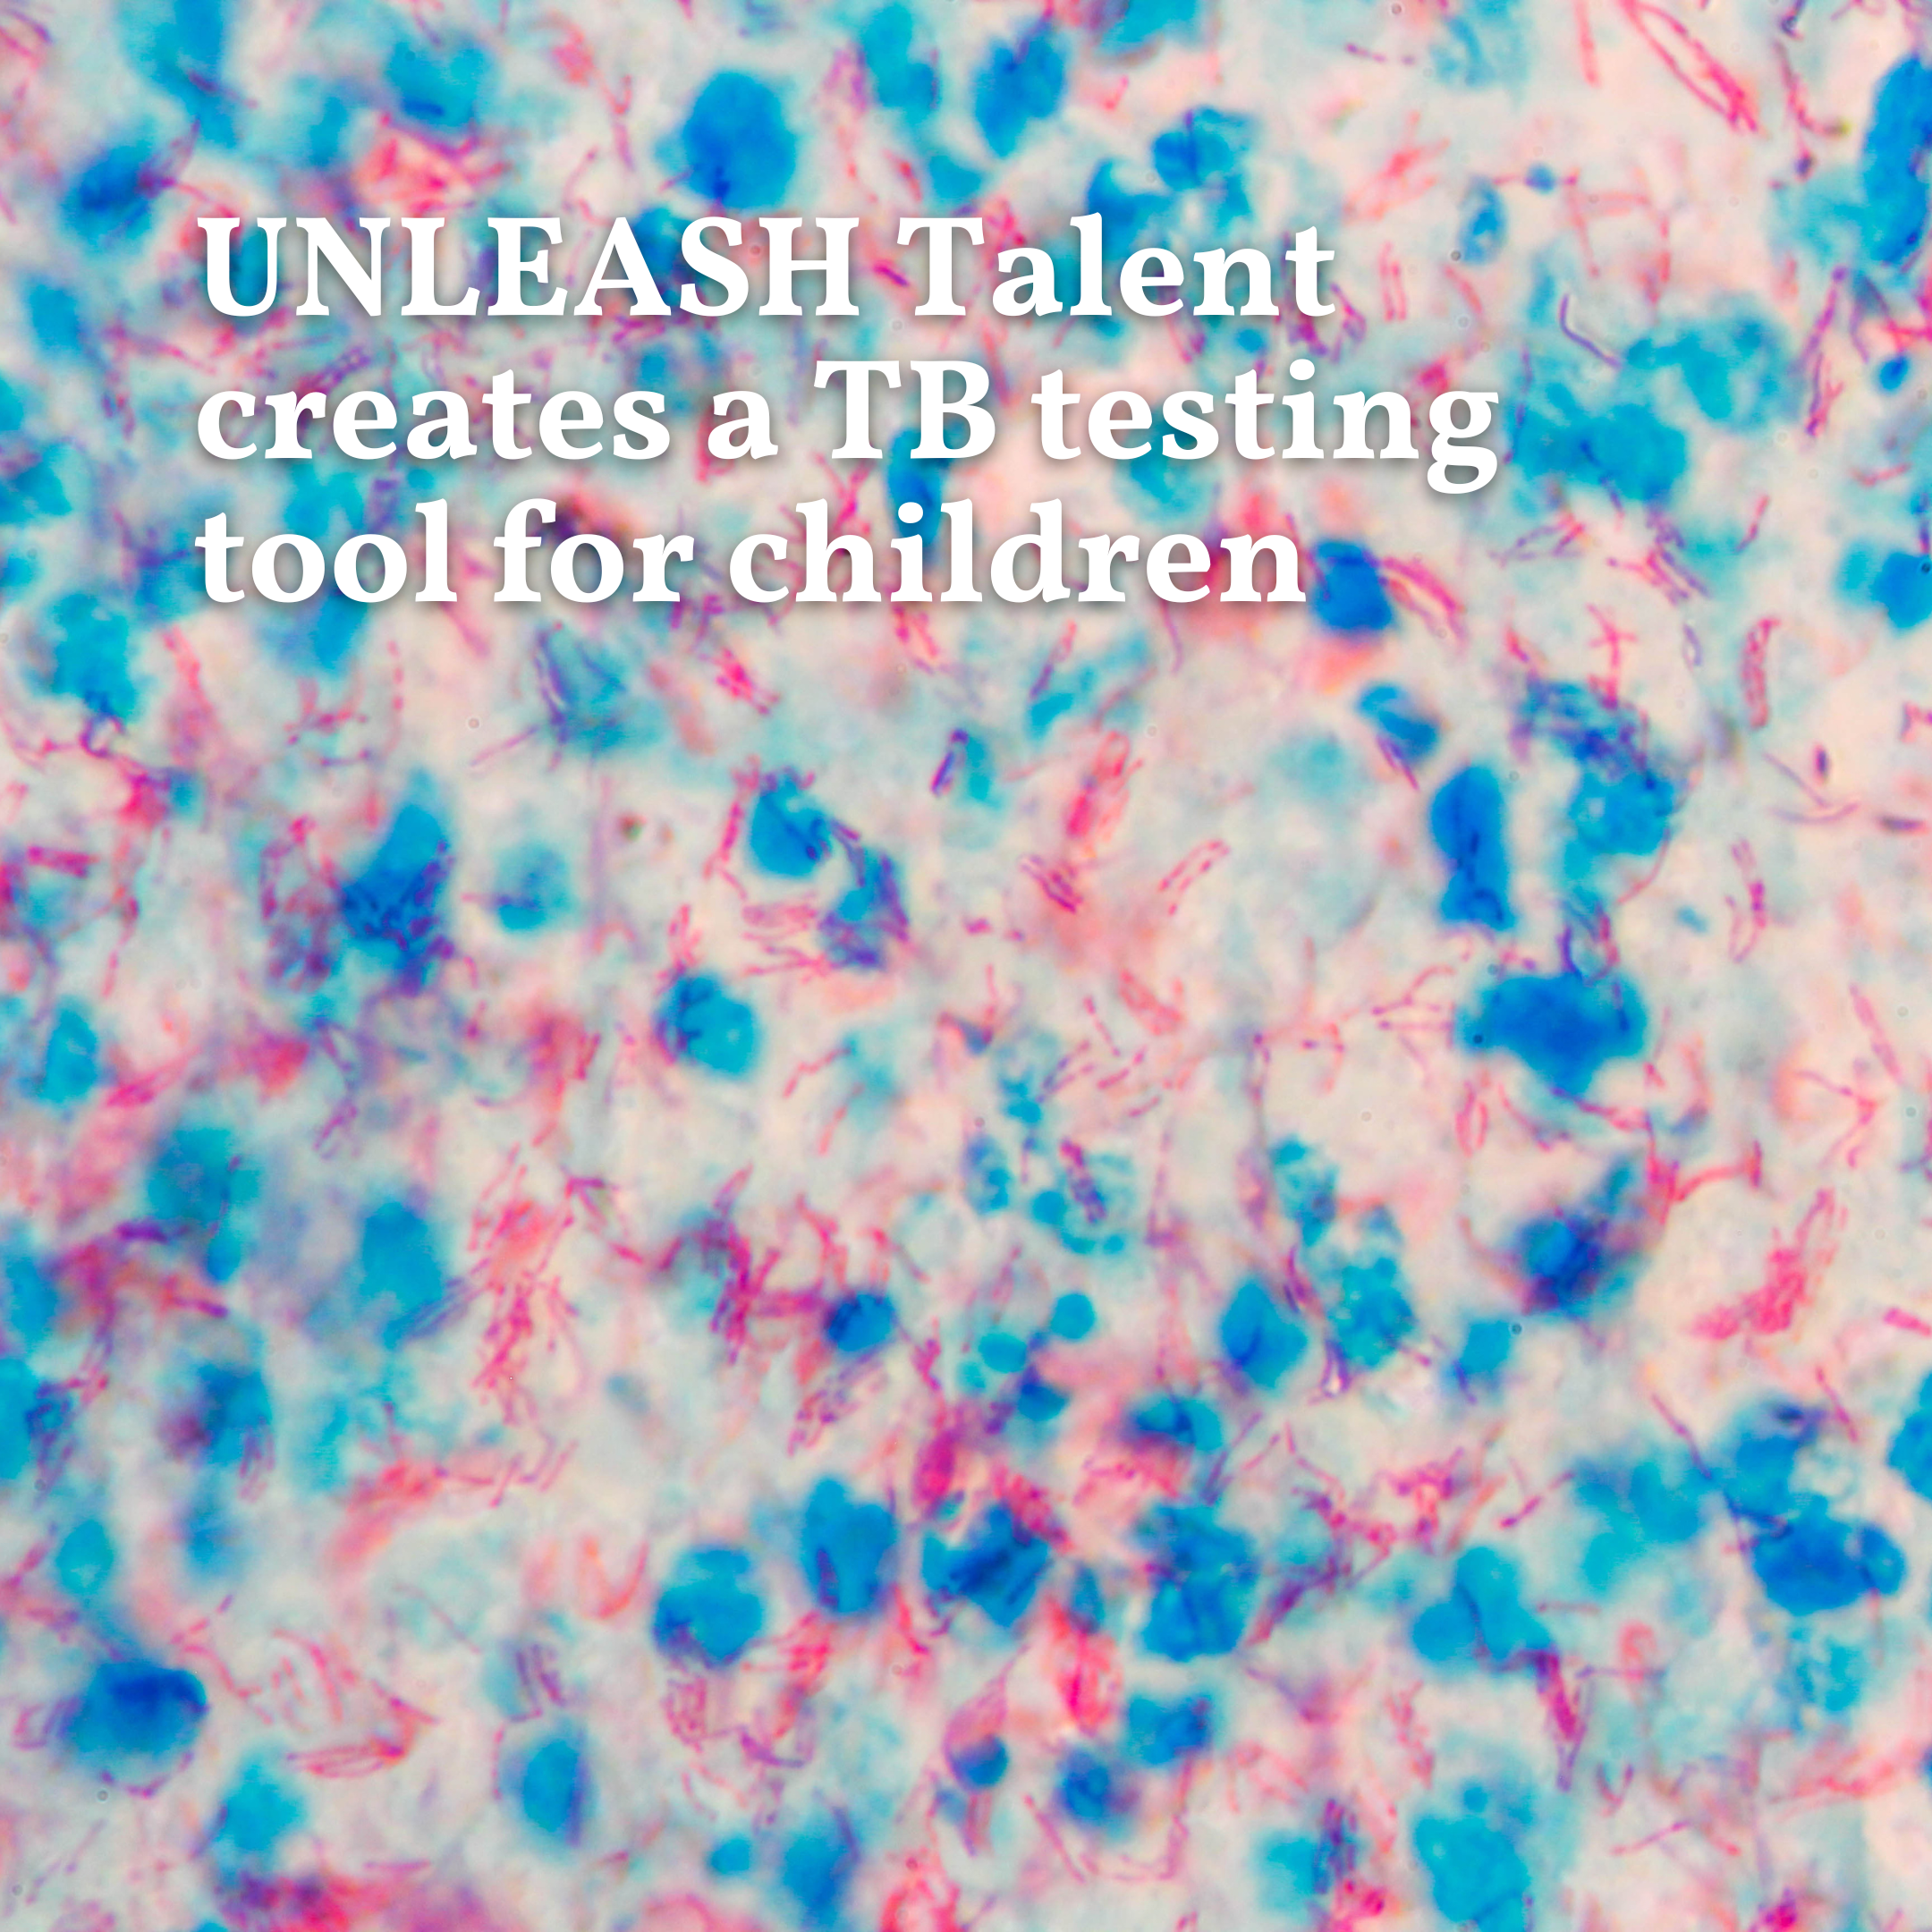 UNLEASH Talent creates a TB testing tool for children​